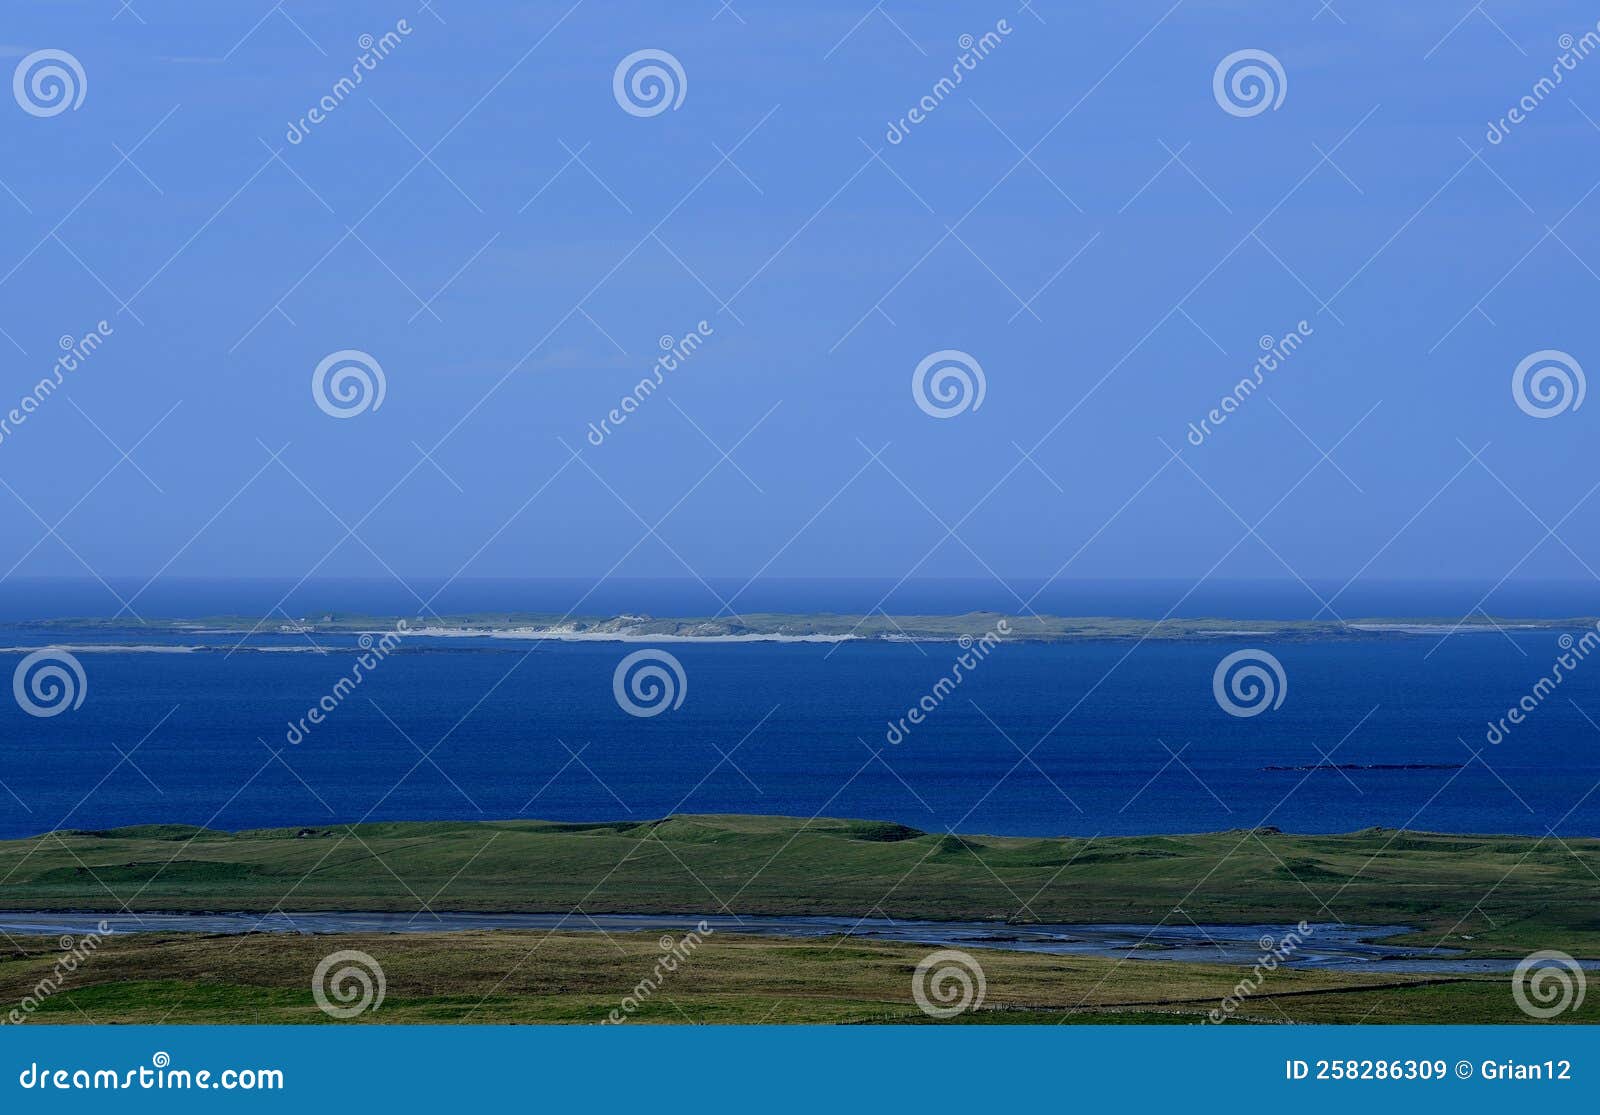 uninhabited islands of the outer hebrides of scotland